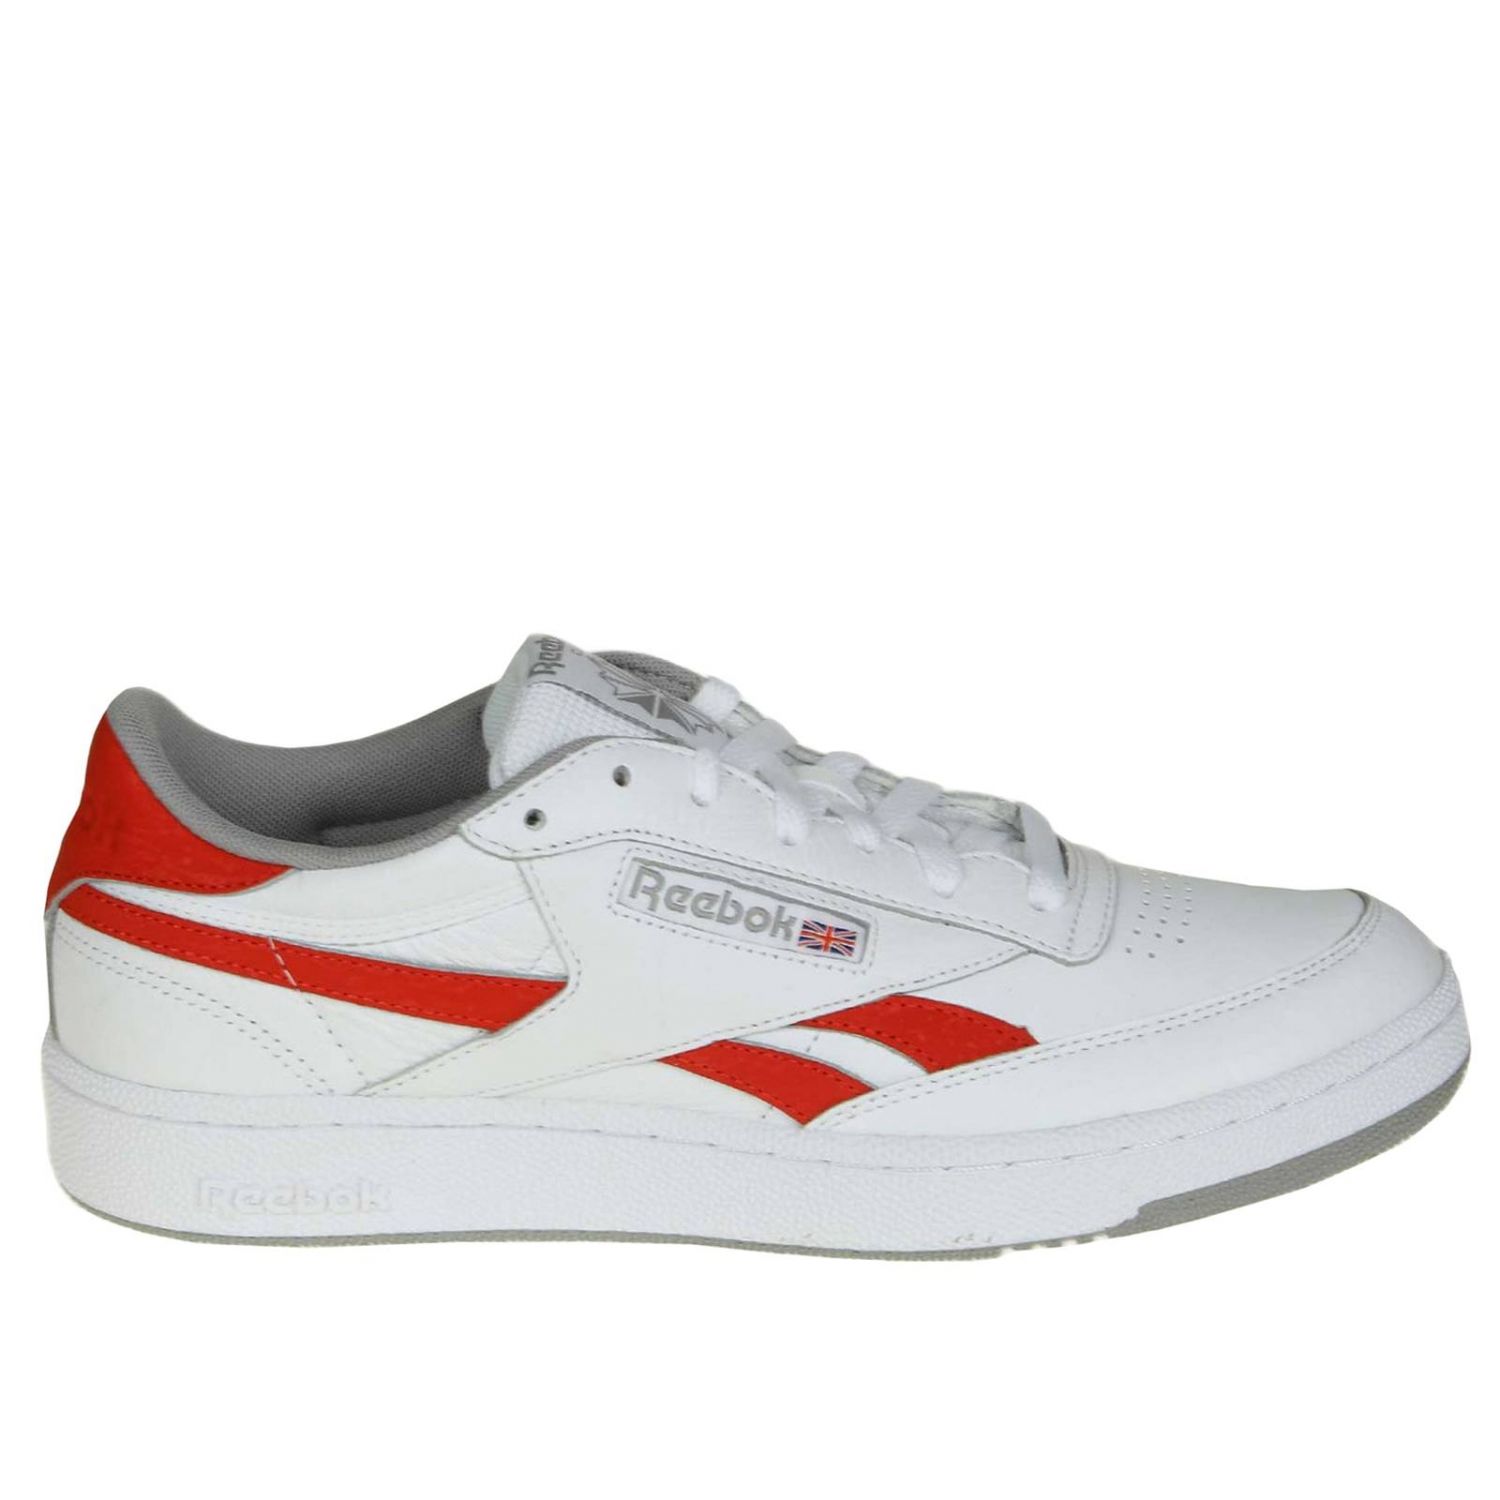 Shoes men Reebok | Sneakers Reebok Men White | Sneakers Reebok CN3396  Giglio EN